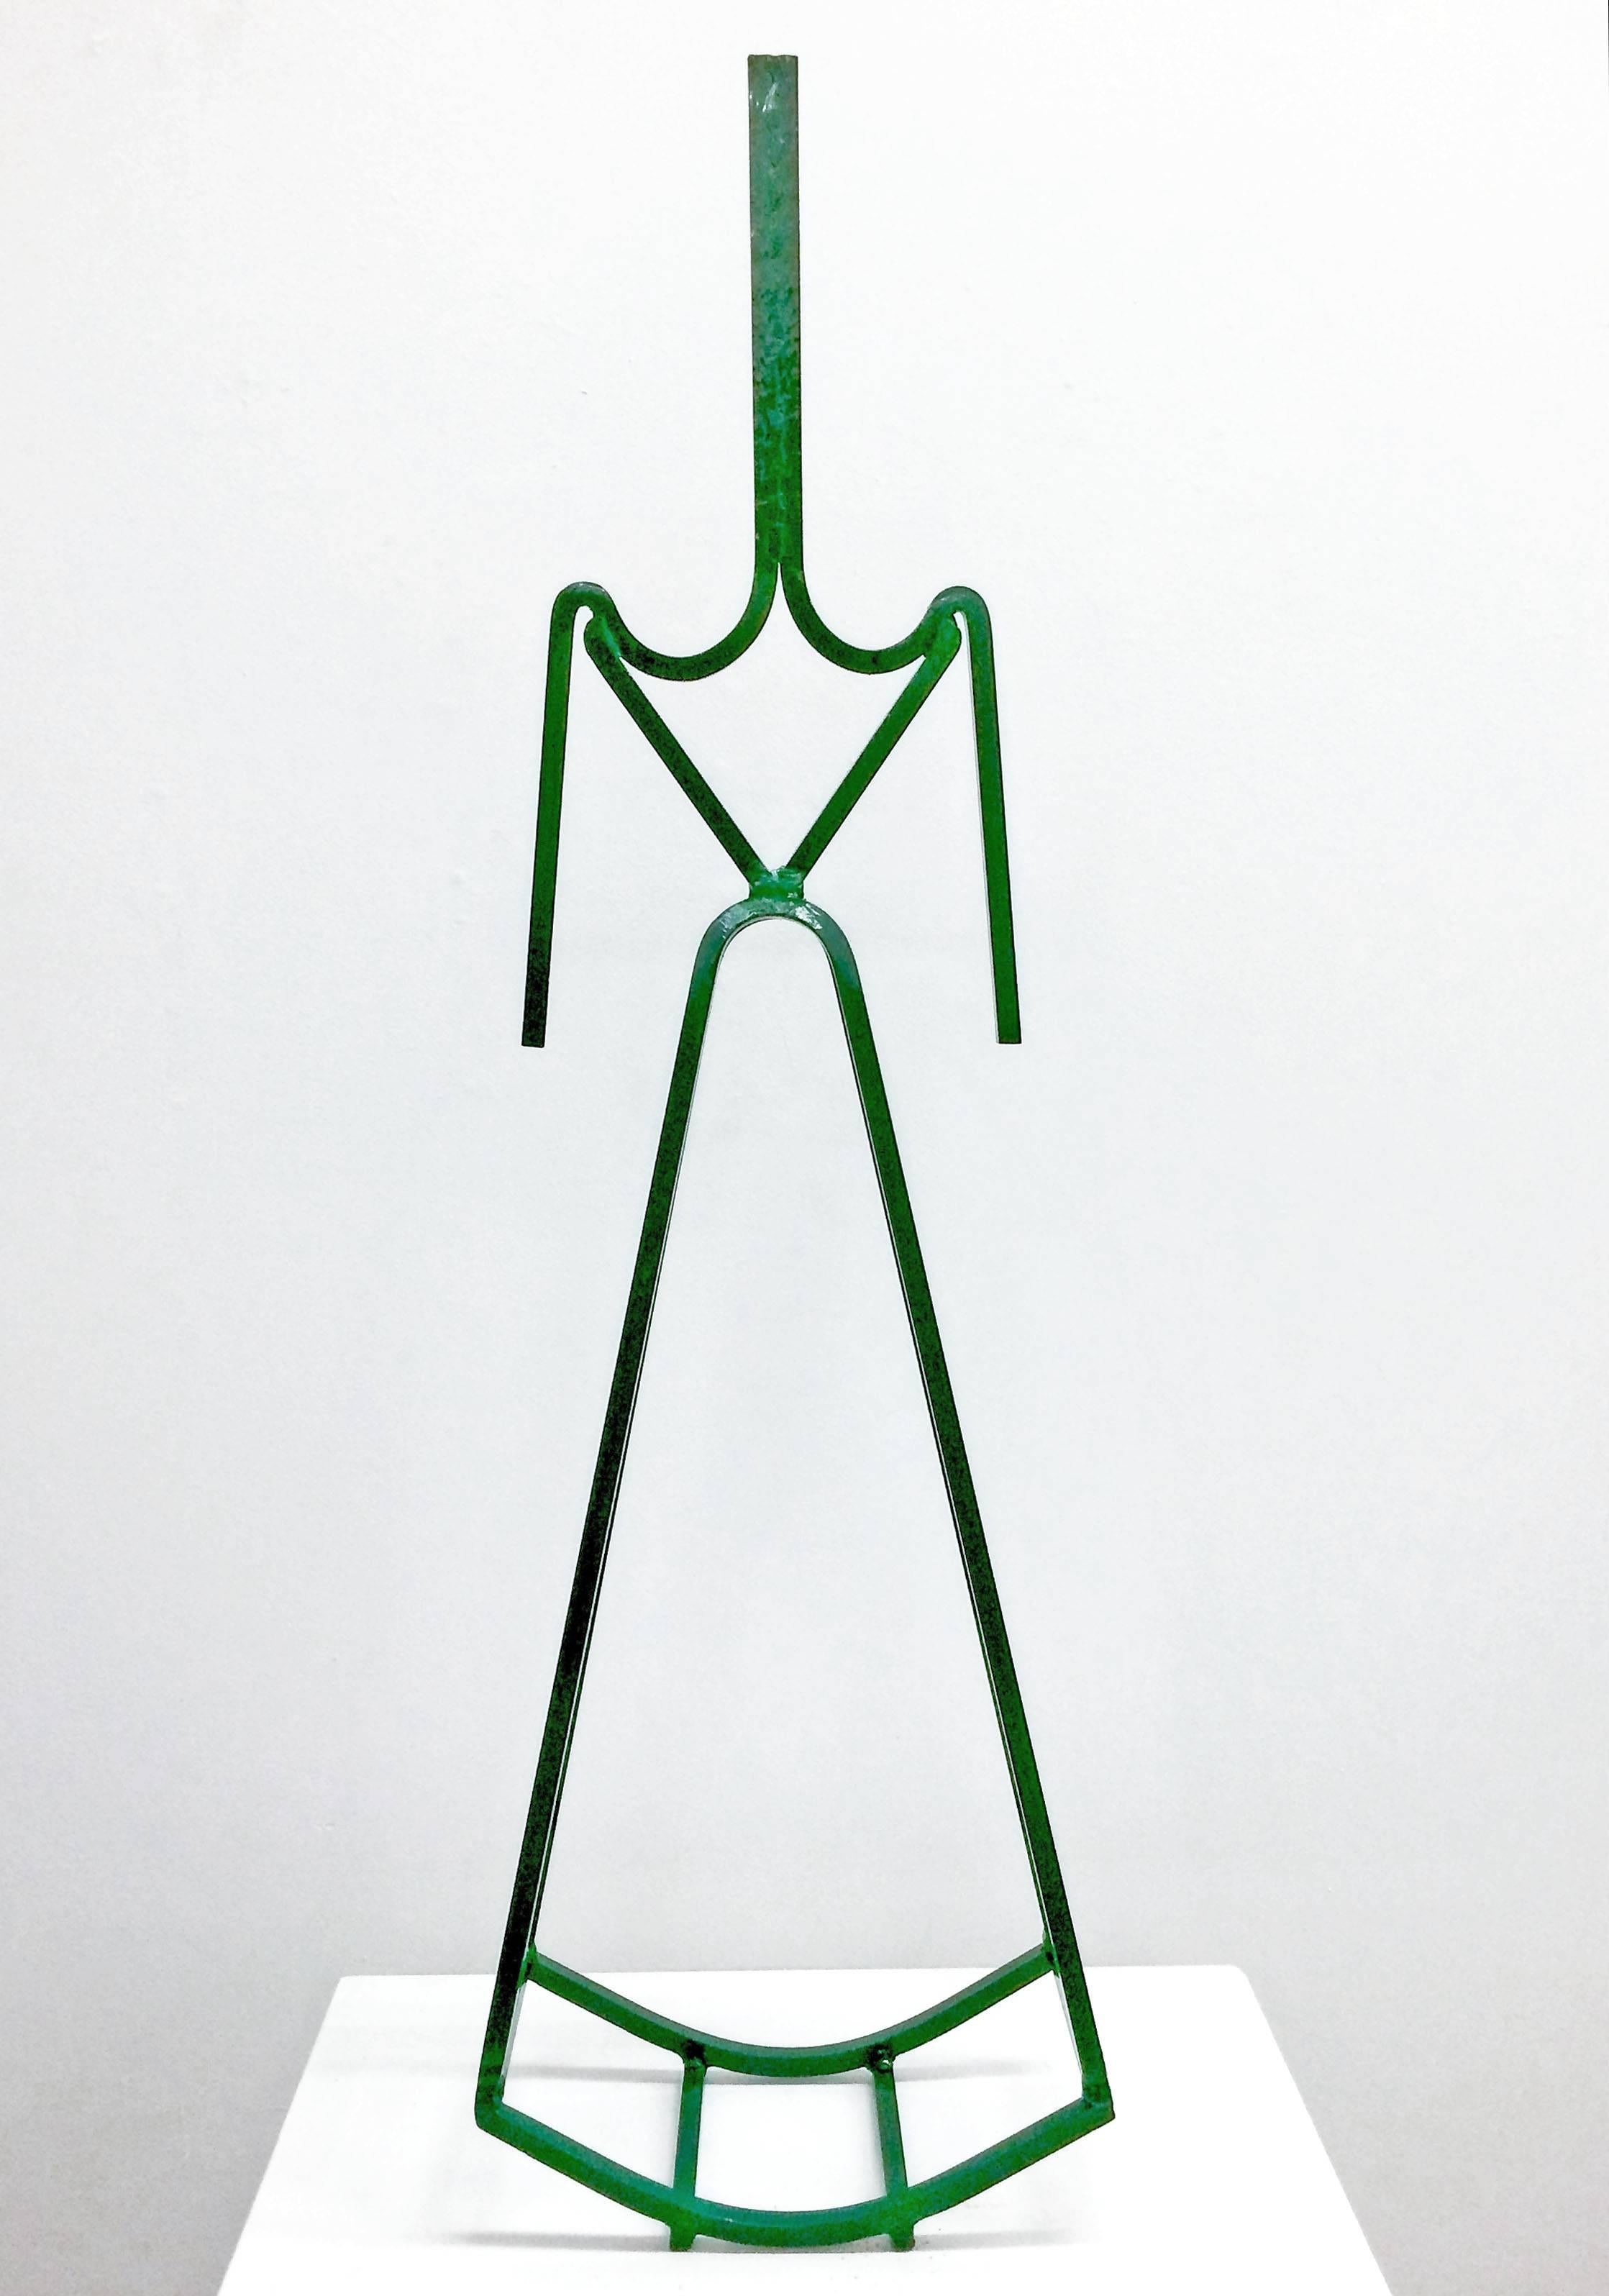 Kyle Breitenbach Figurative Sculpture - Untitled (Green)